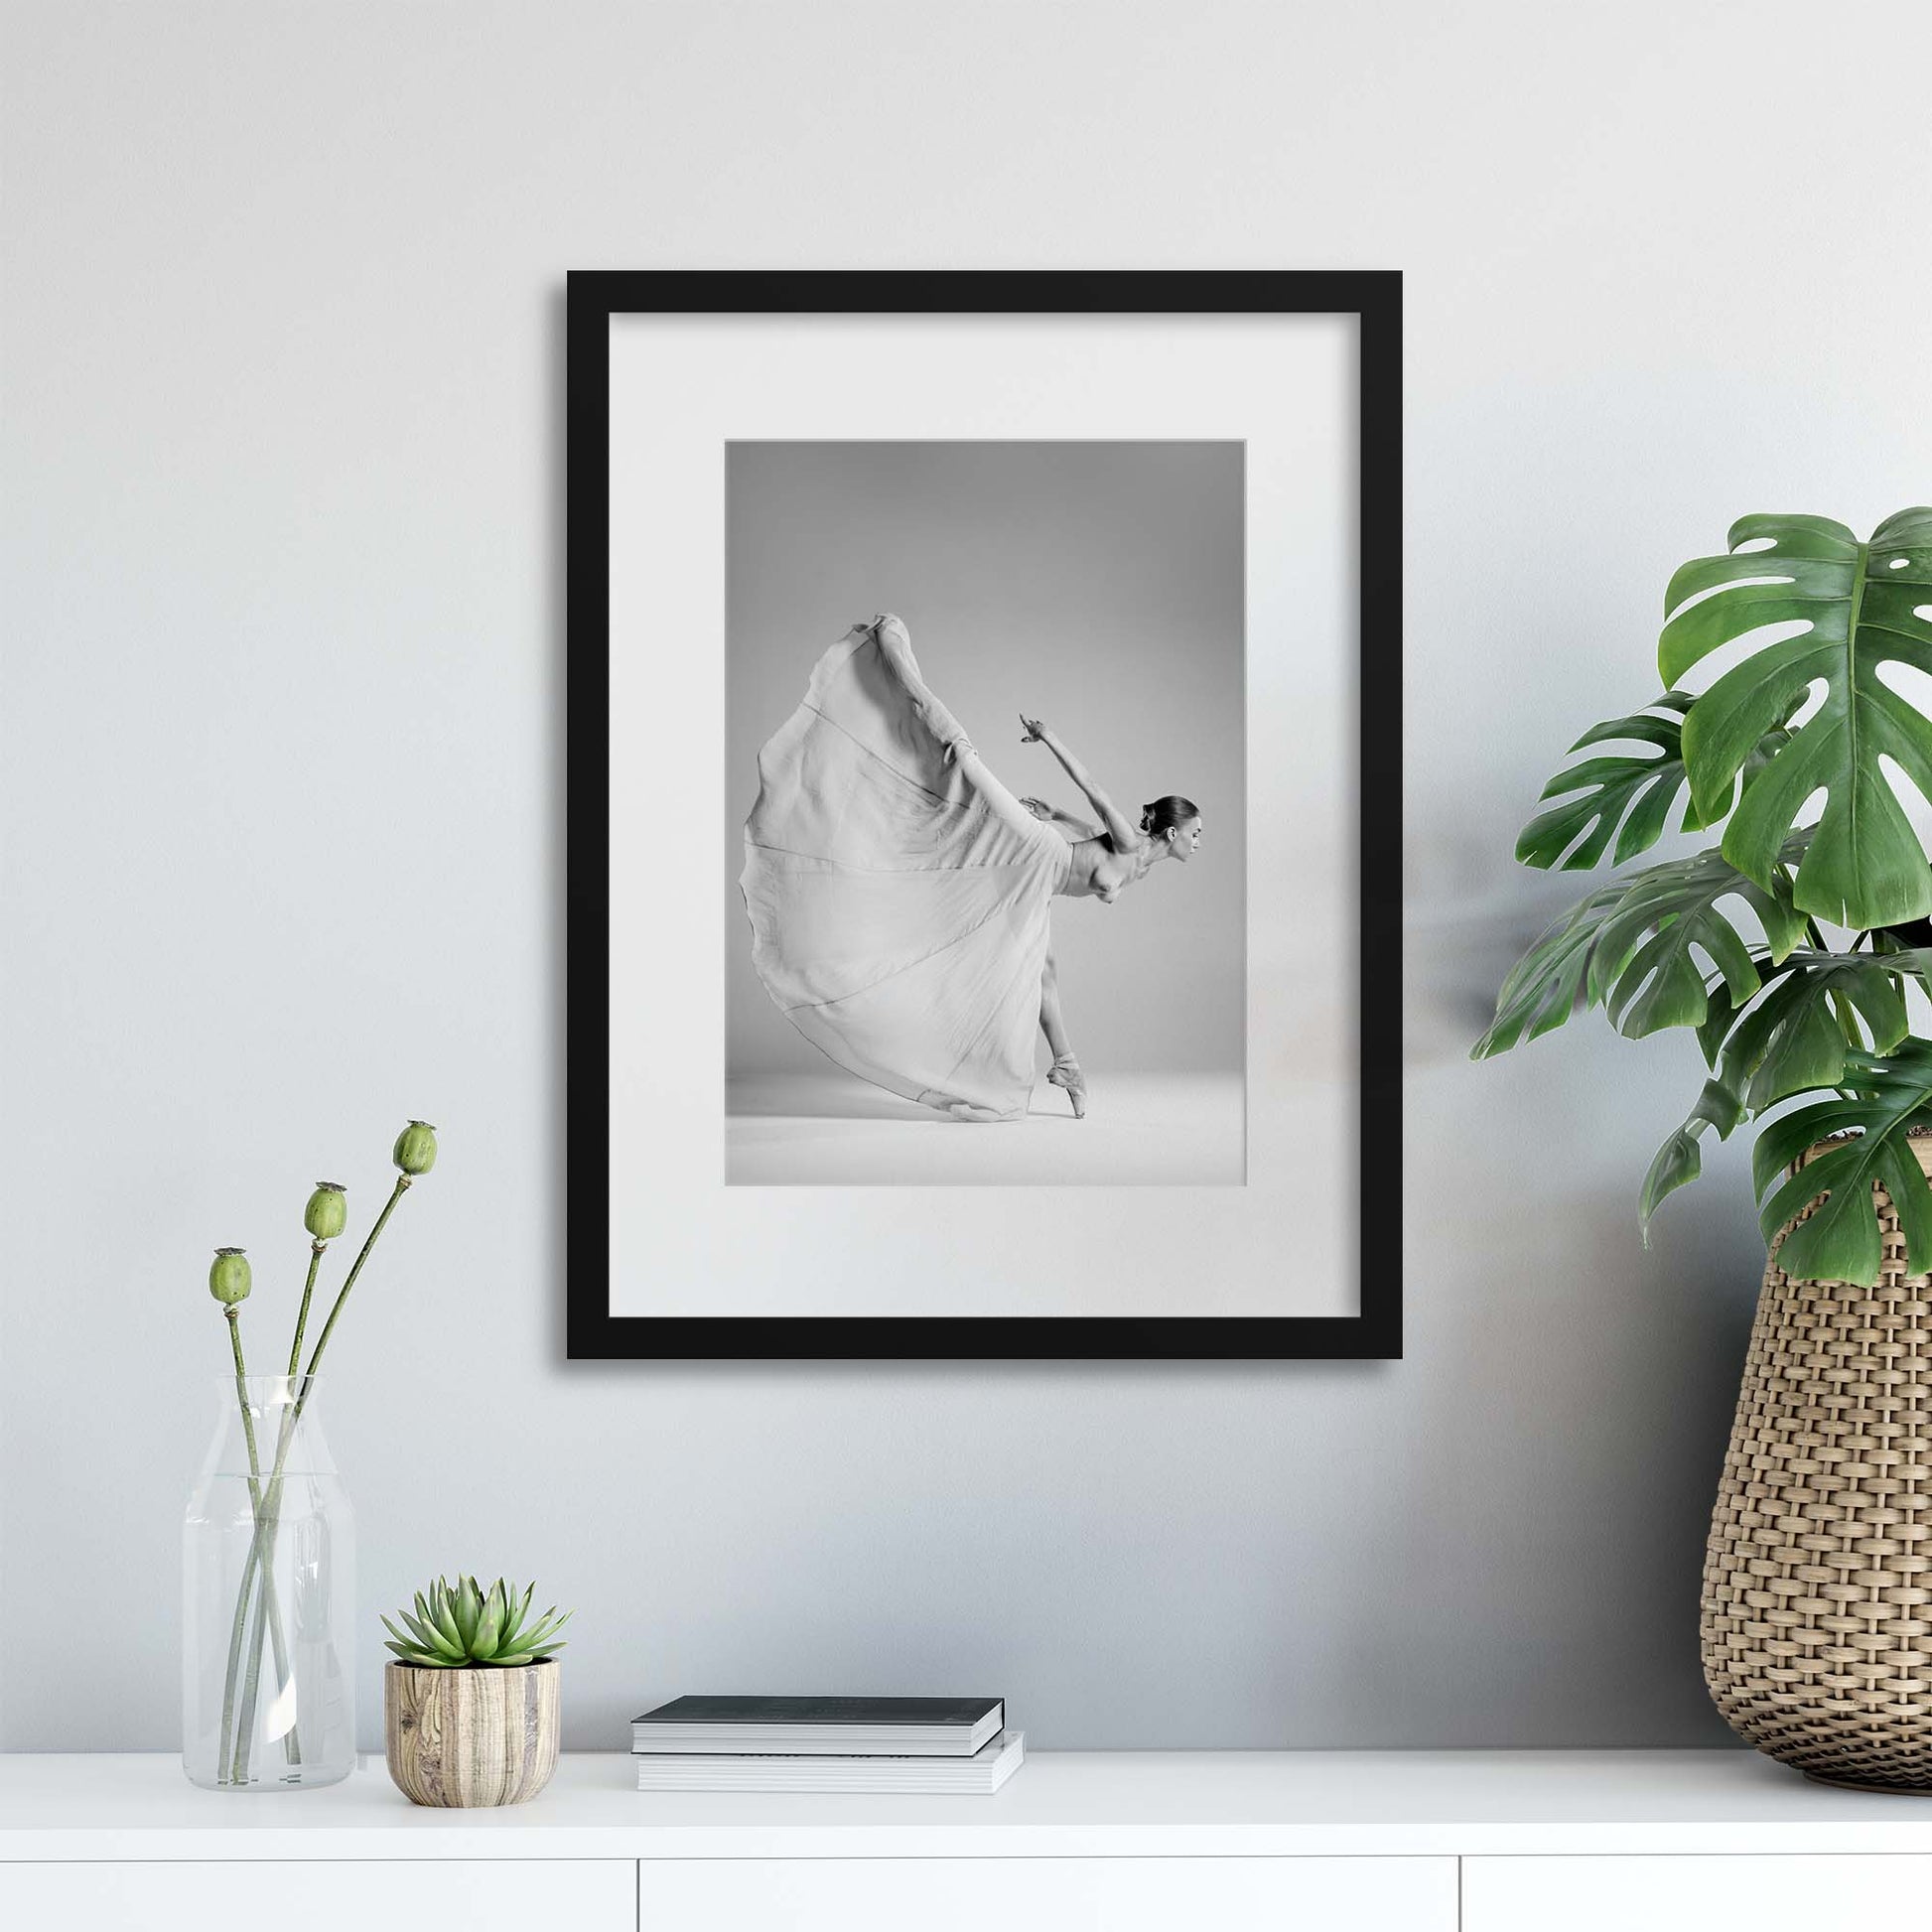 Butterfly by Arkadiusz Branicki Framed Print - USTAD HOME